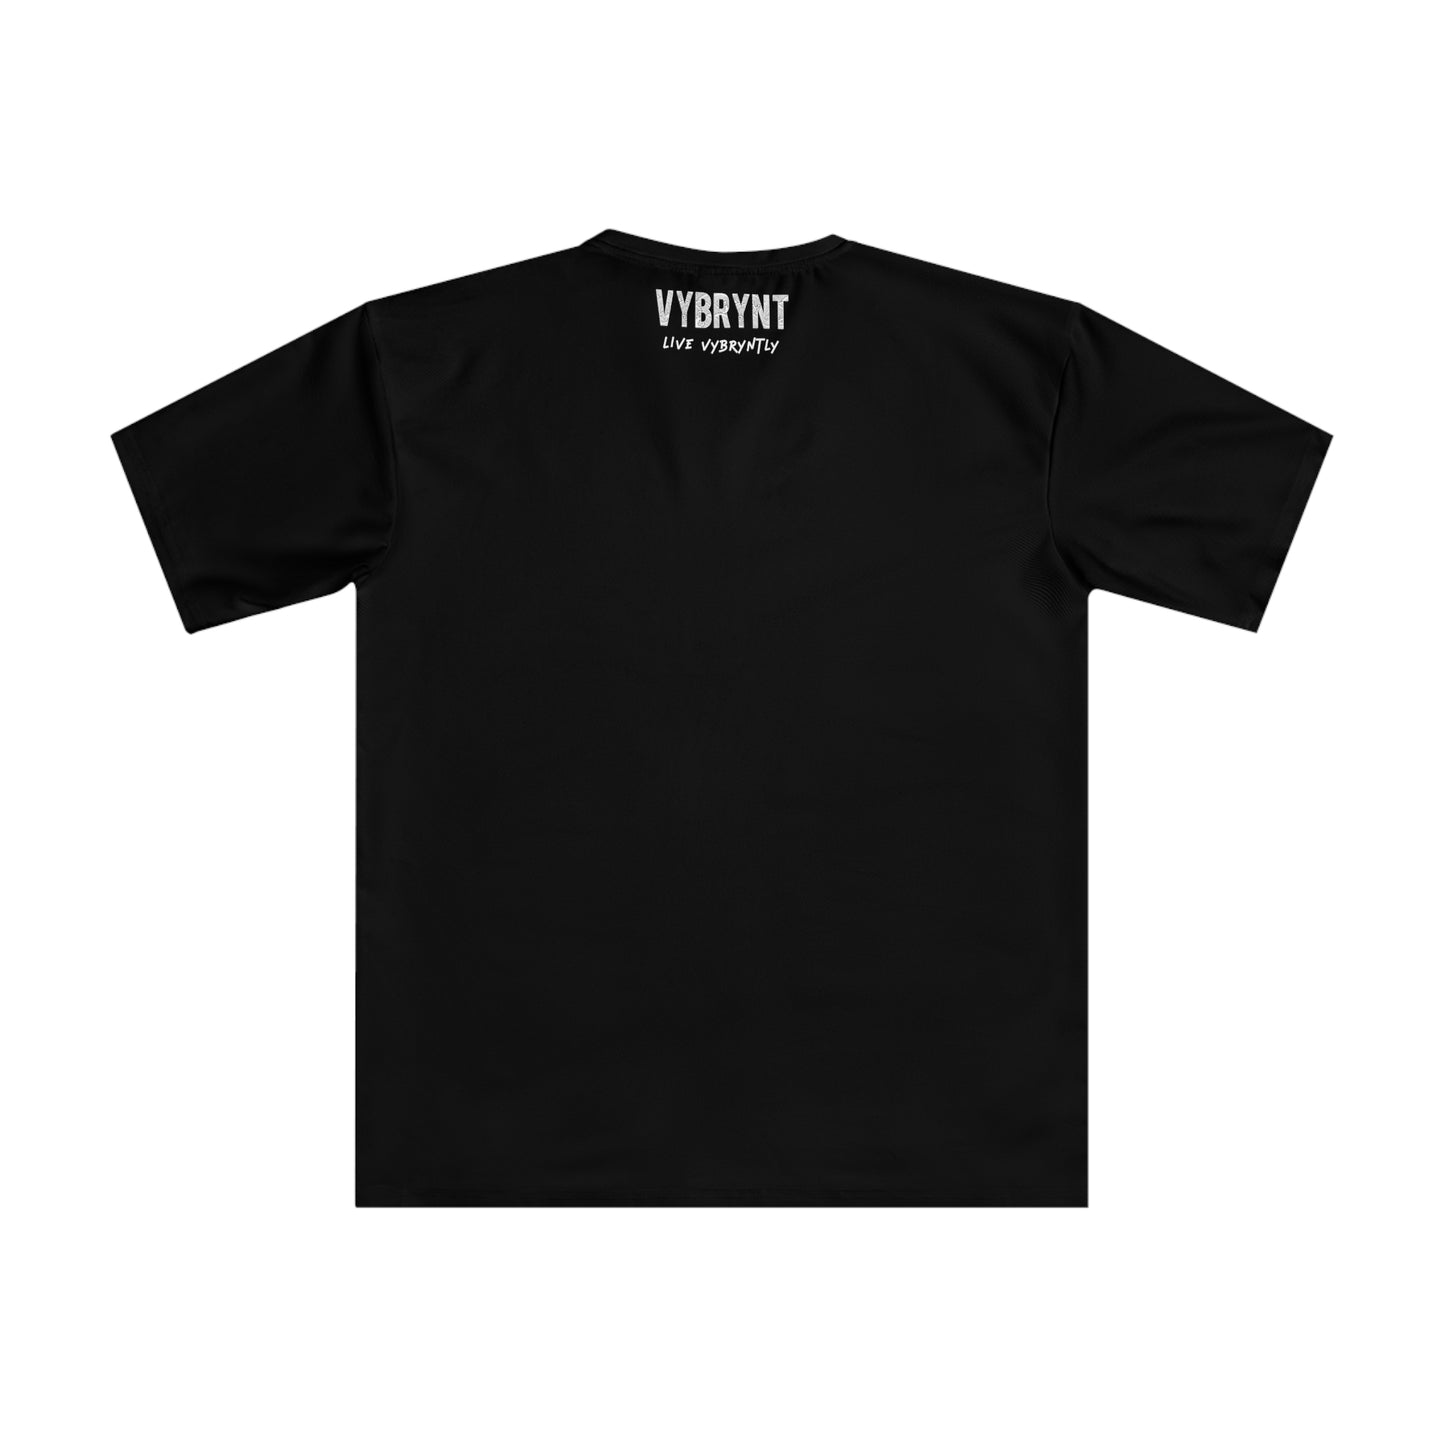 Shadow Play Men's Black T-shirt